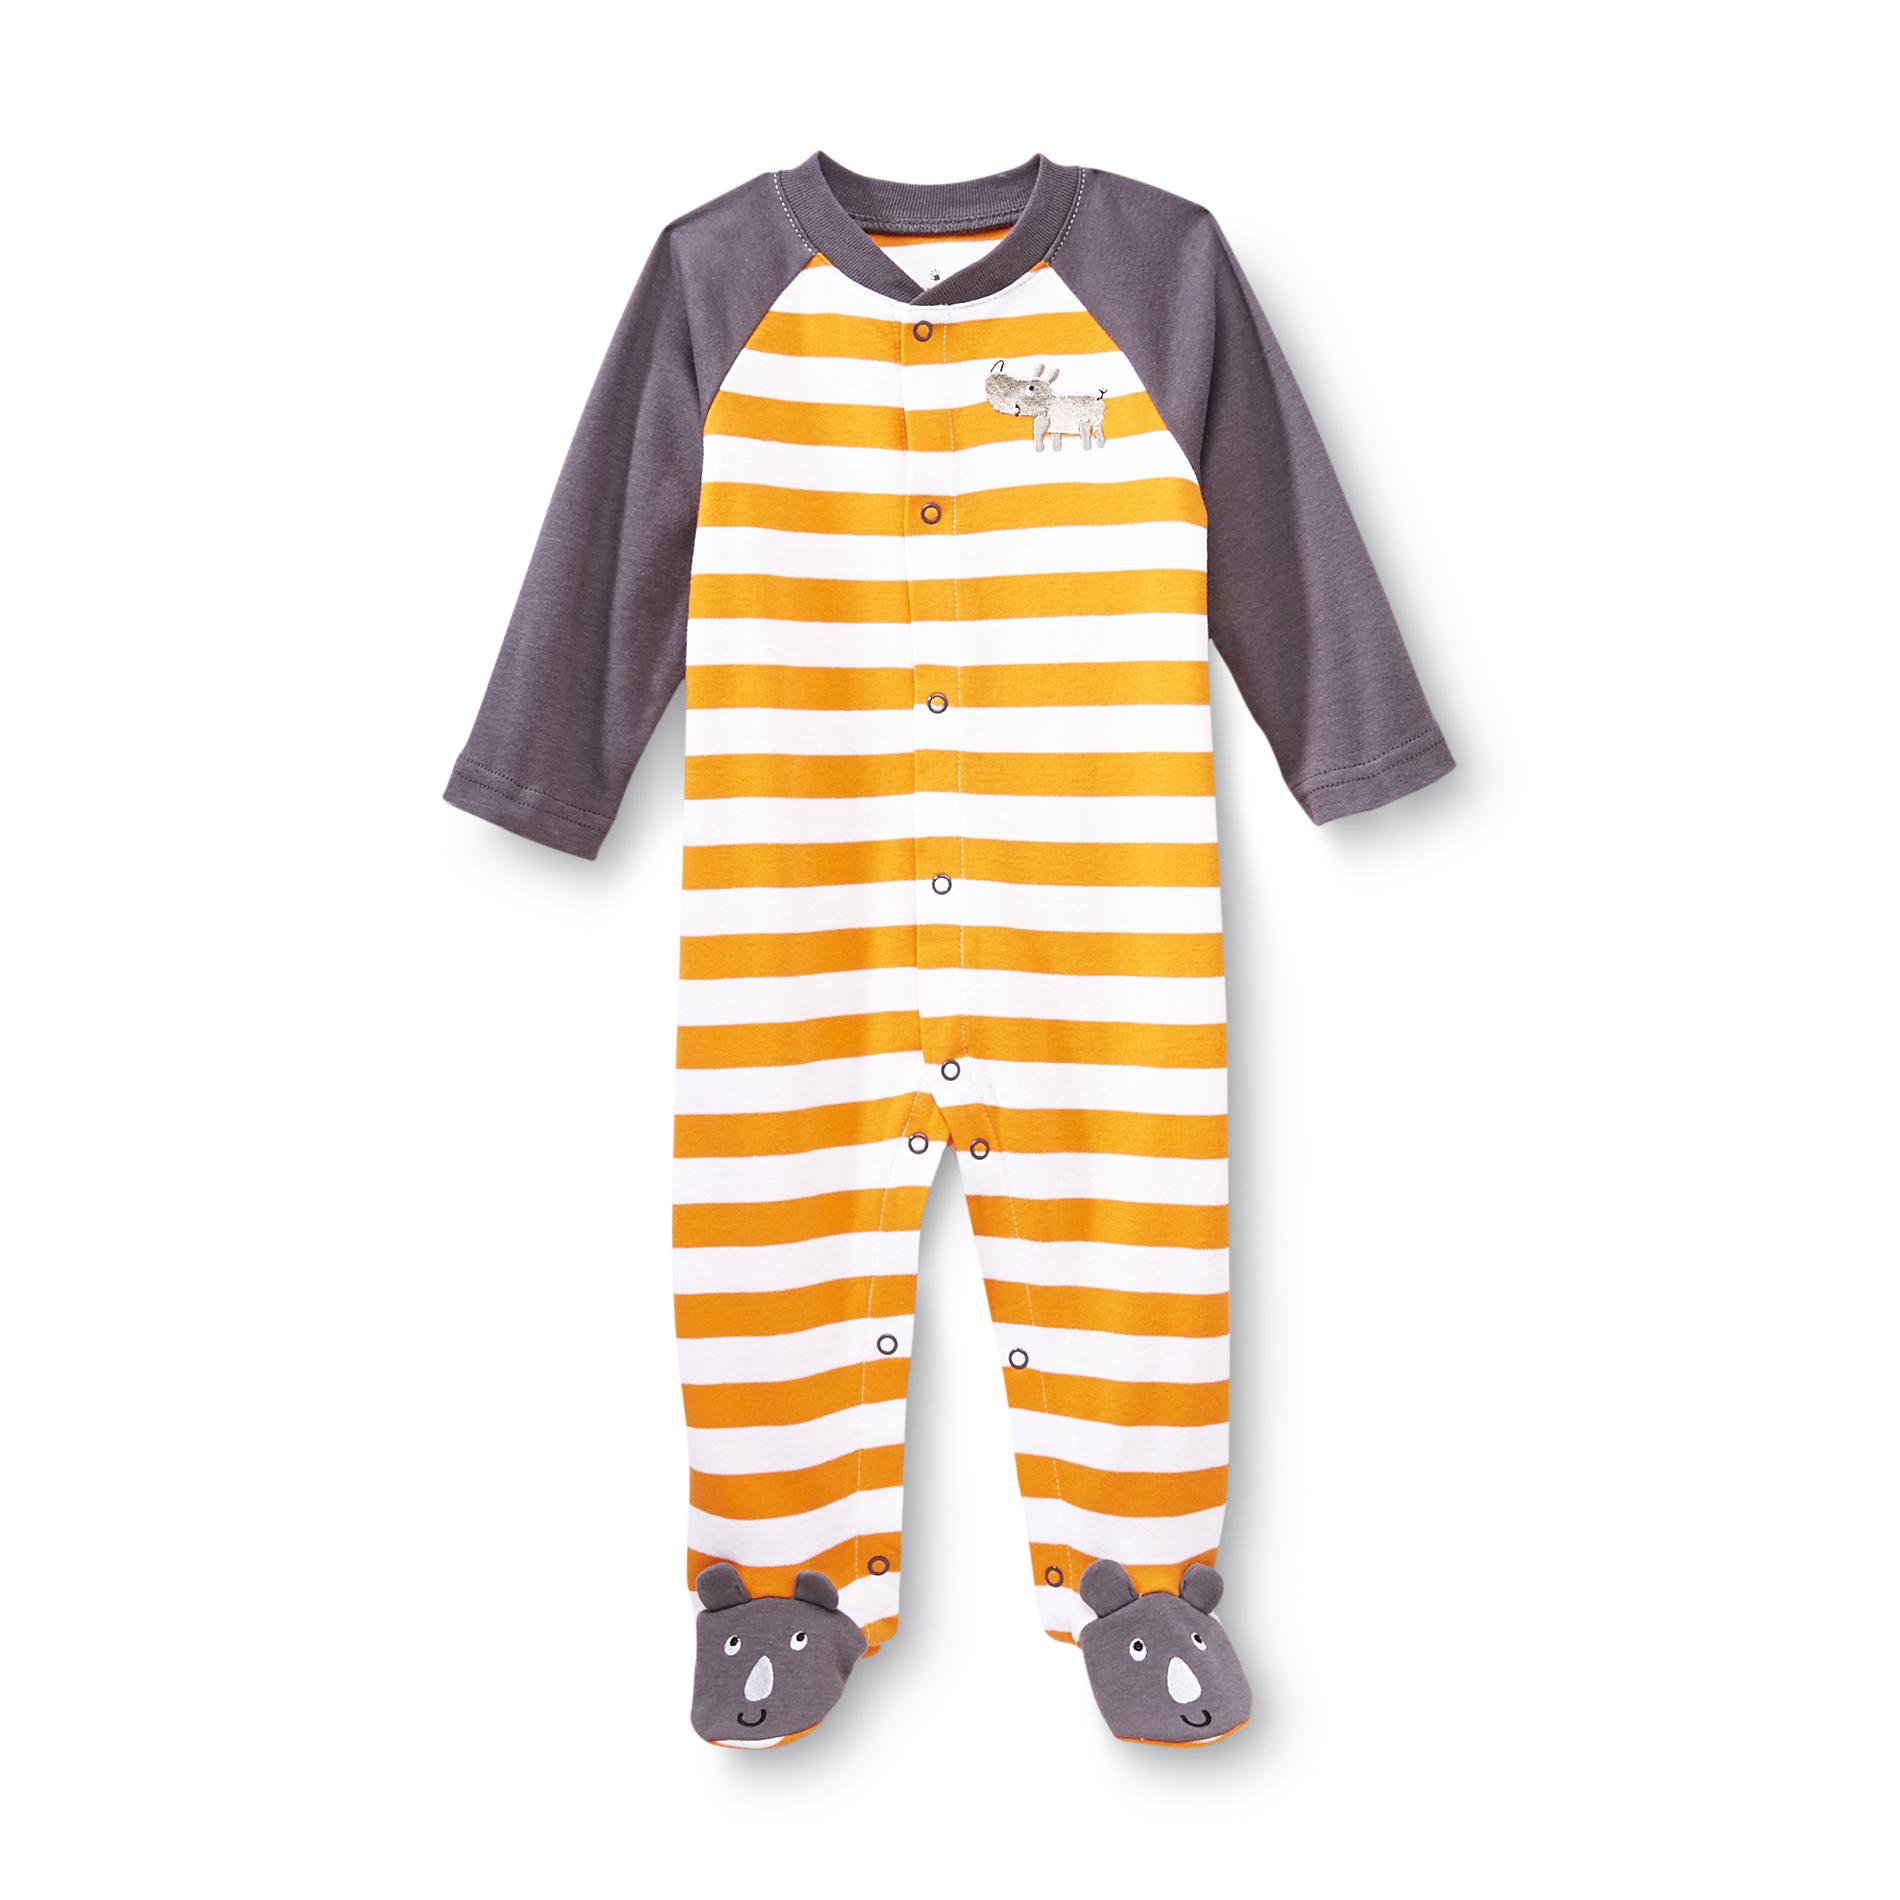 Small Wonders Newborn Boy's Sleeper Pajamas - Rhino